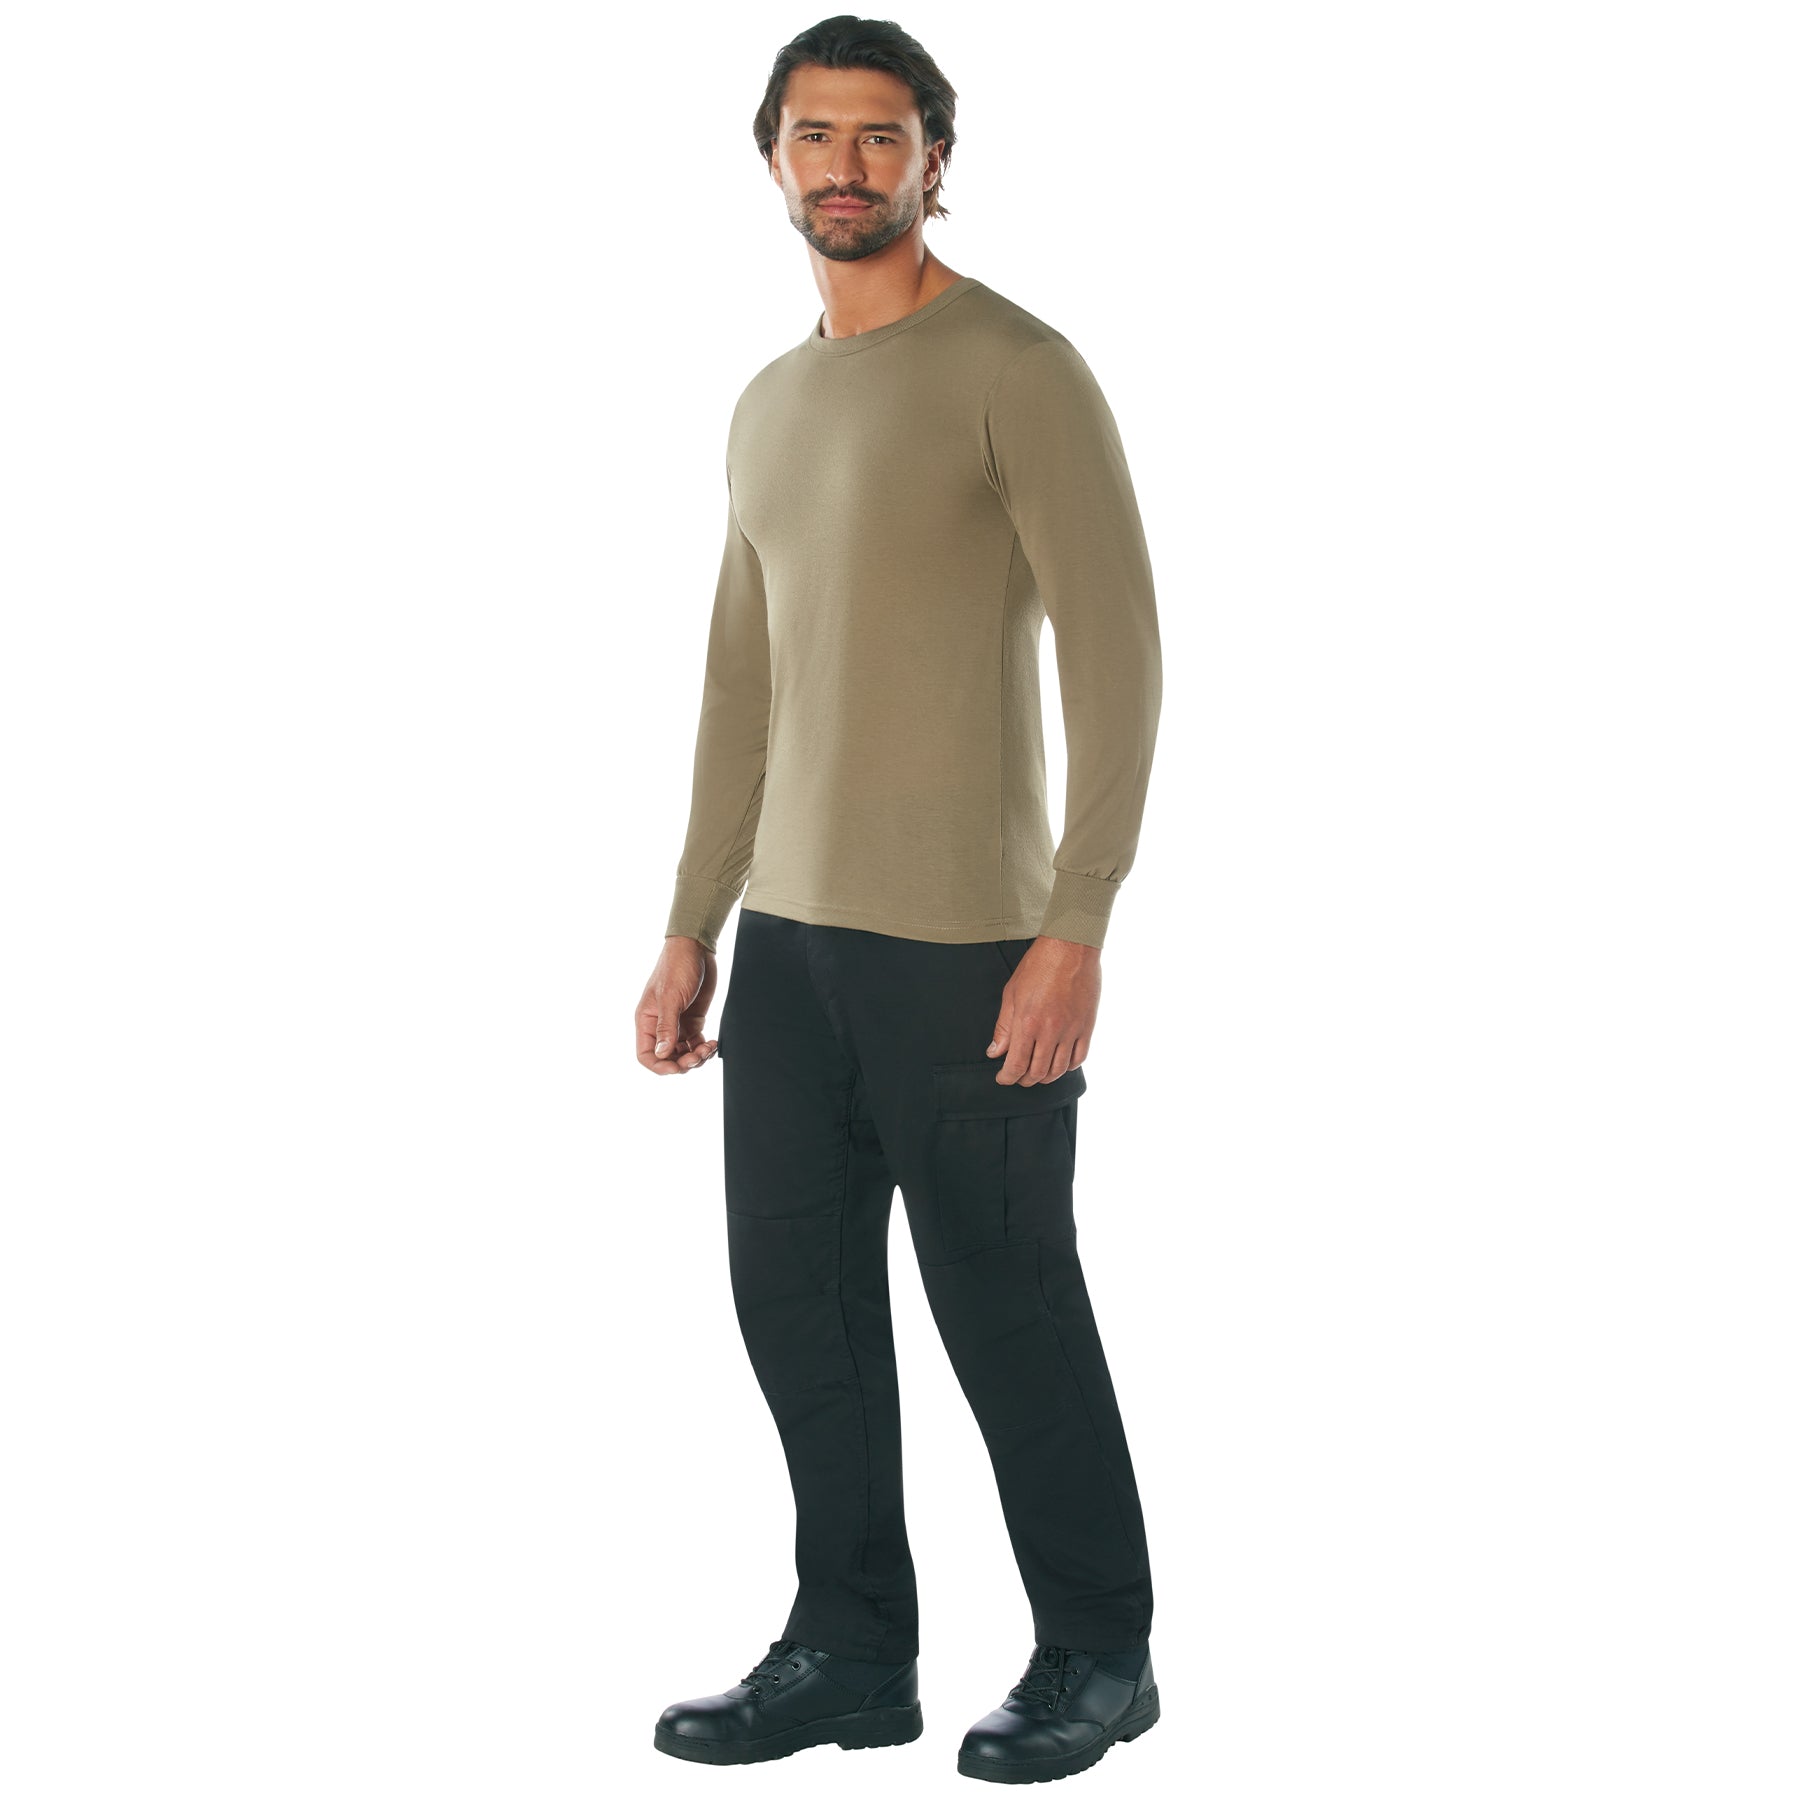 Rothco Moisture Wicking Long Sleeve T-Shirt - Tactical Choice Plus